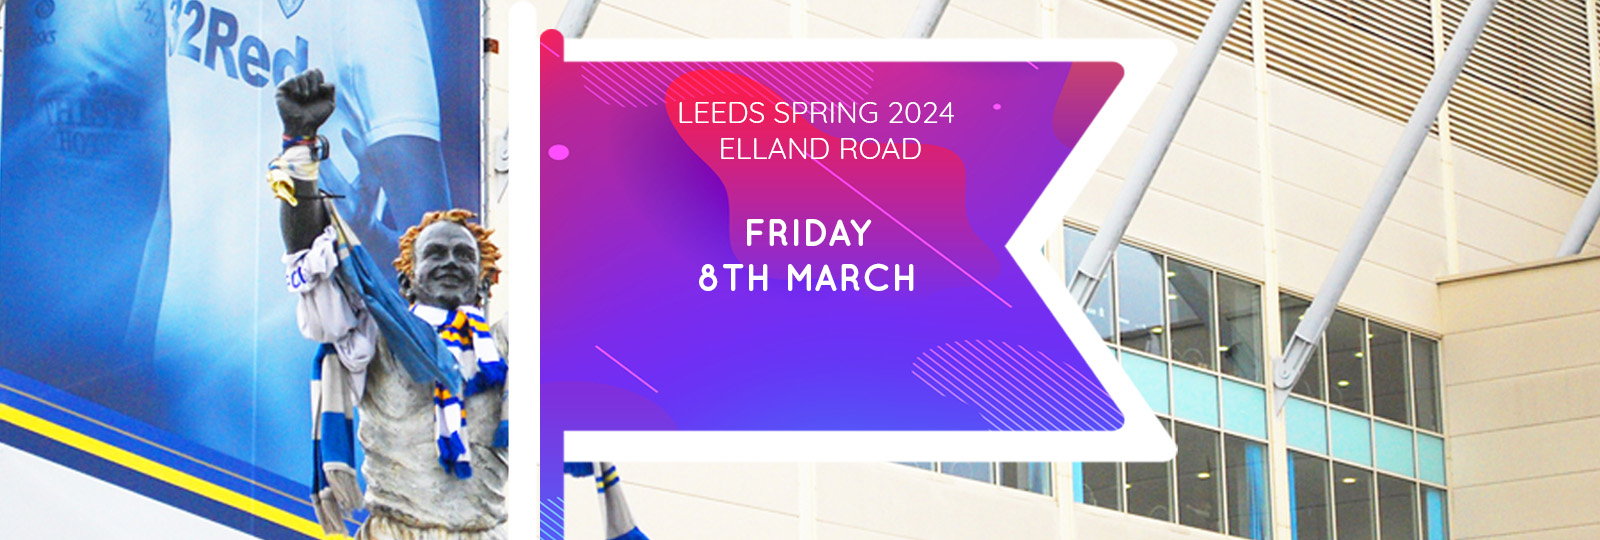 Leeds Spring 2024 Fair